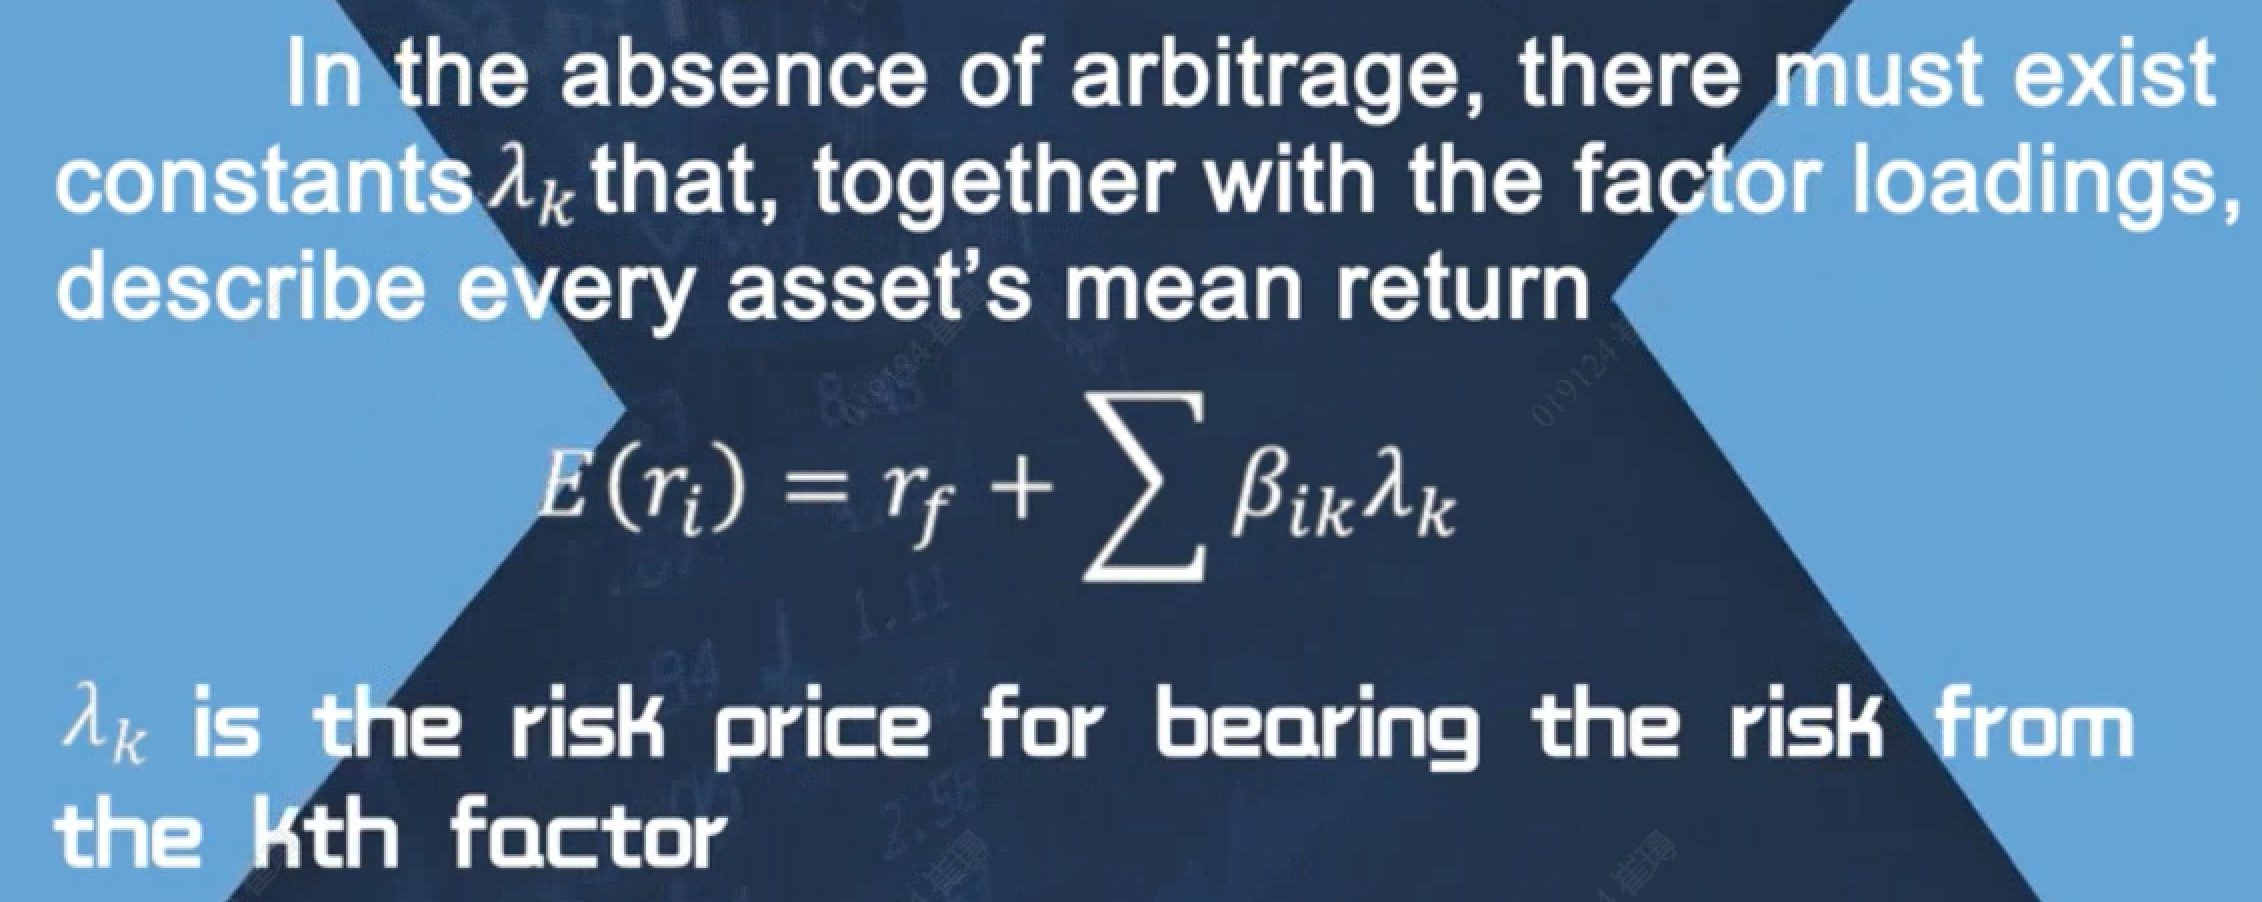 CFA - 投资学 - 5.套利定价理论APT - Arbitrage Pricing Theroy